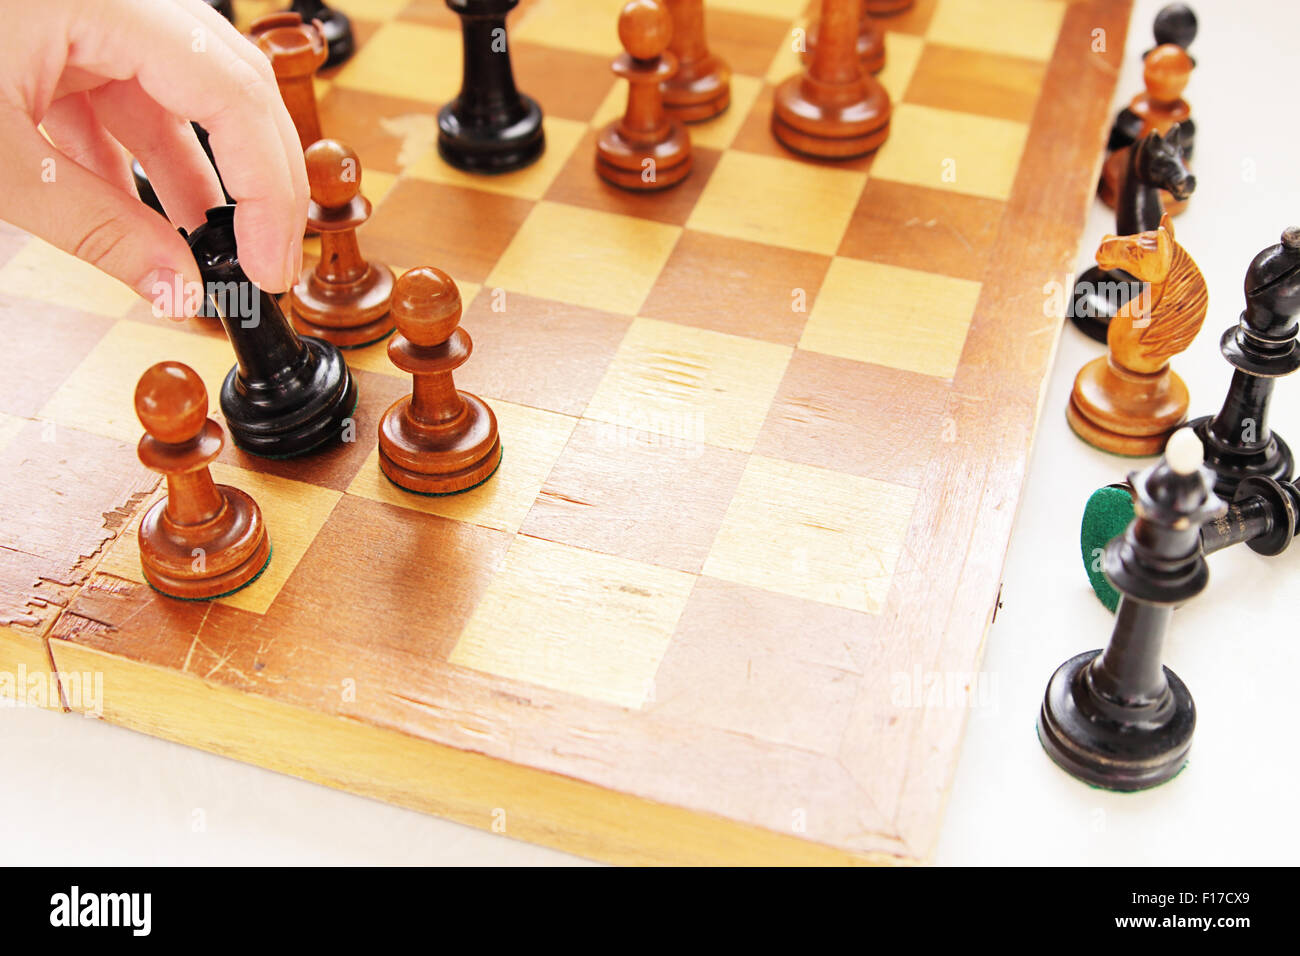 Hand Man Taking Chess Piece Make Next Move Chess Game Stock Photo by  ©guruxox 640426472